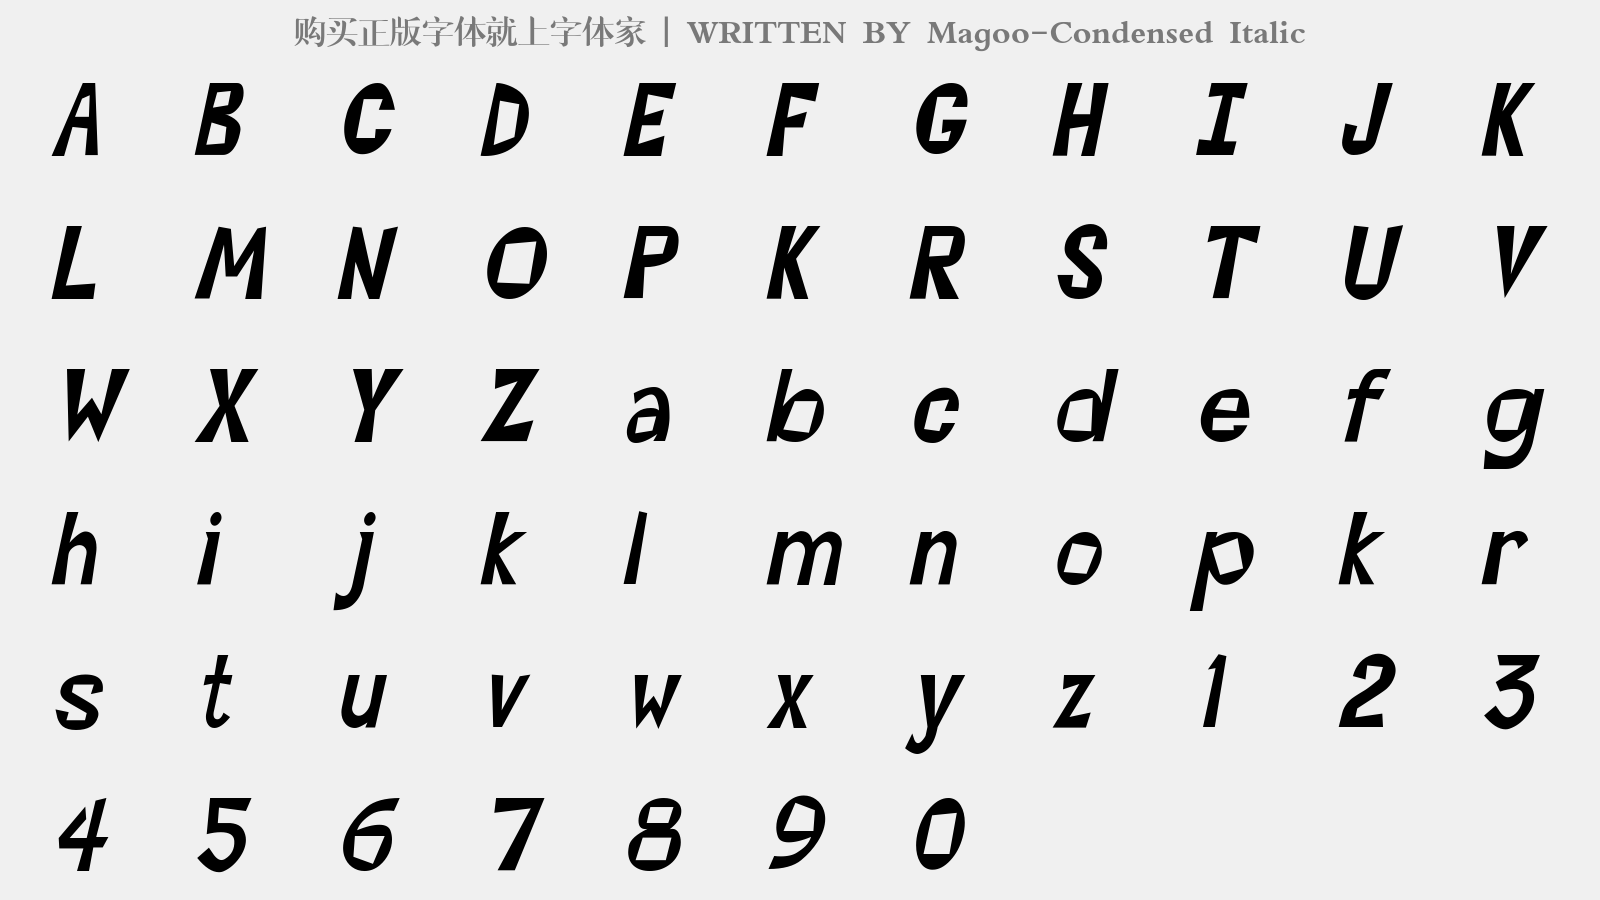 Magoo-Condensed Italic - 大写字母/小写字母/数字